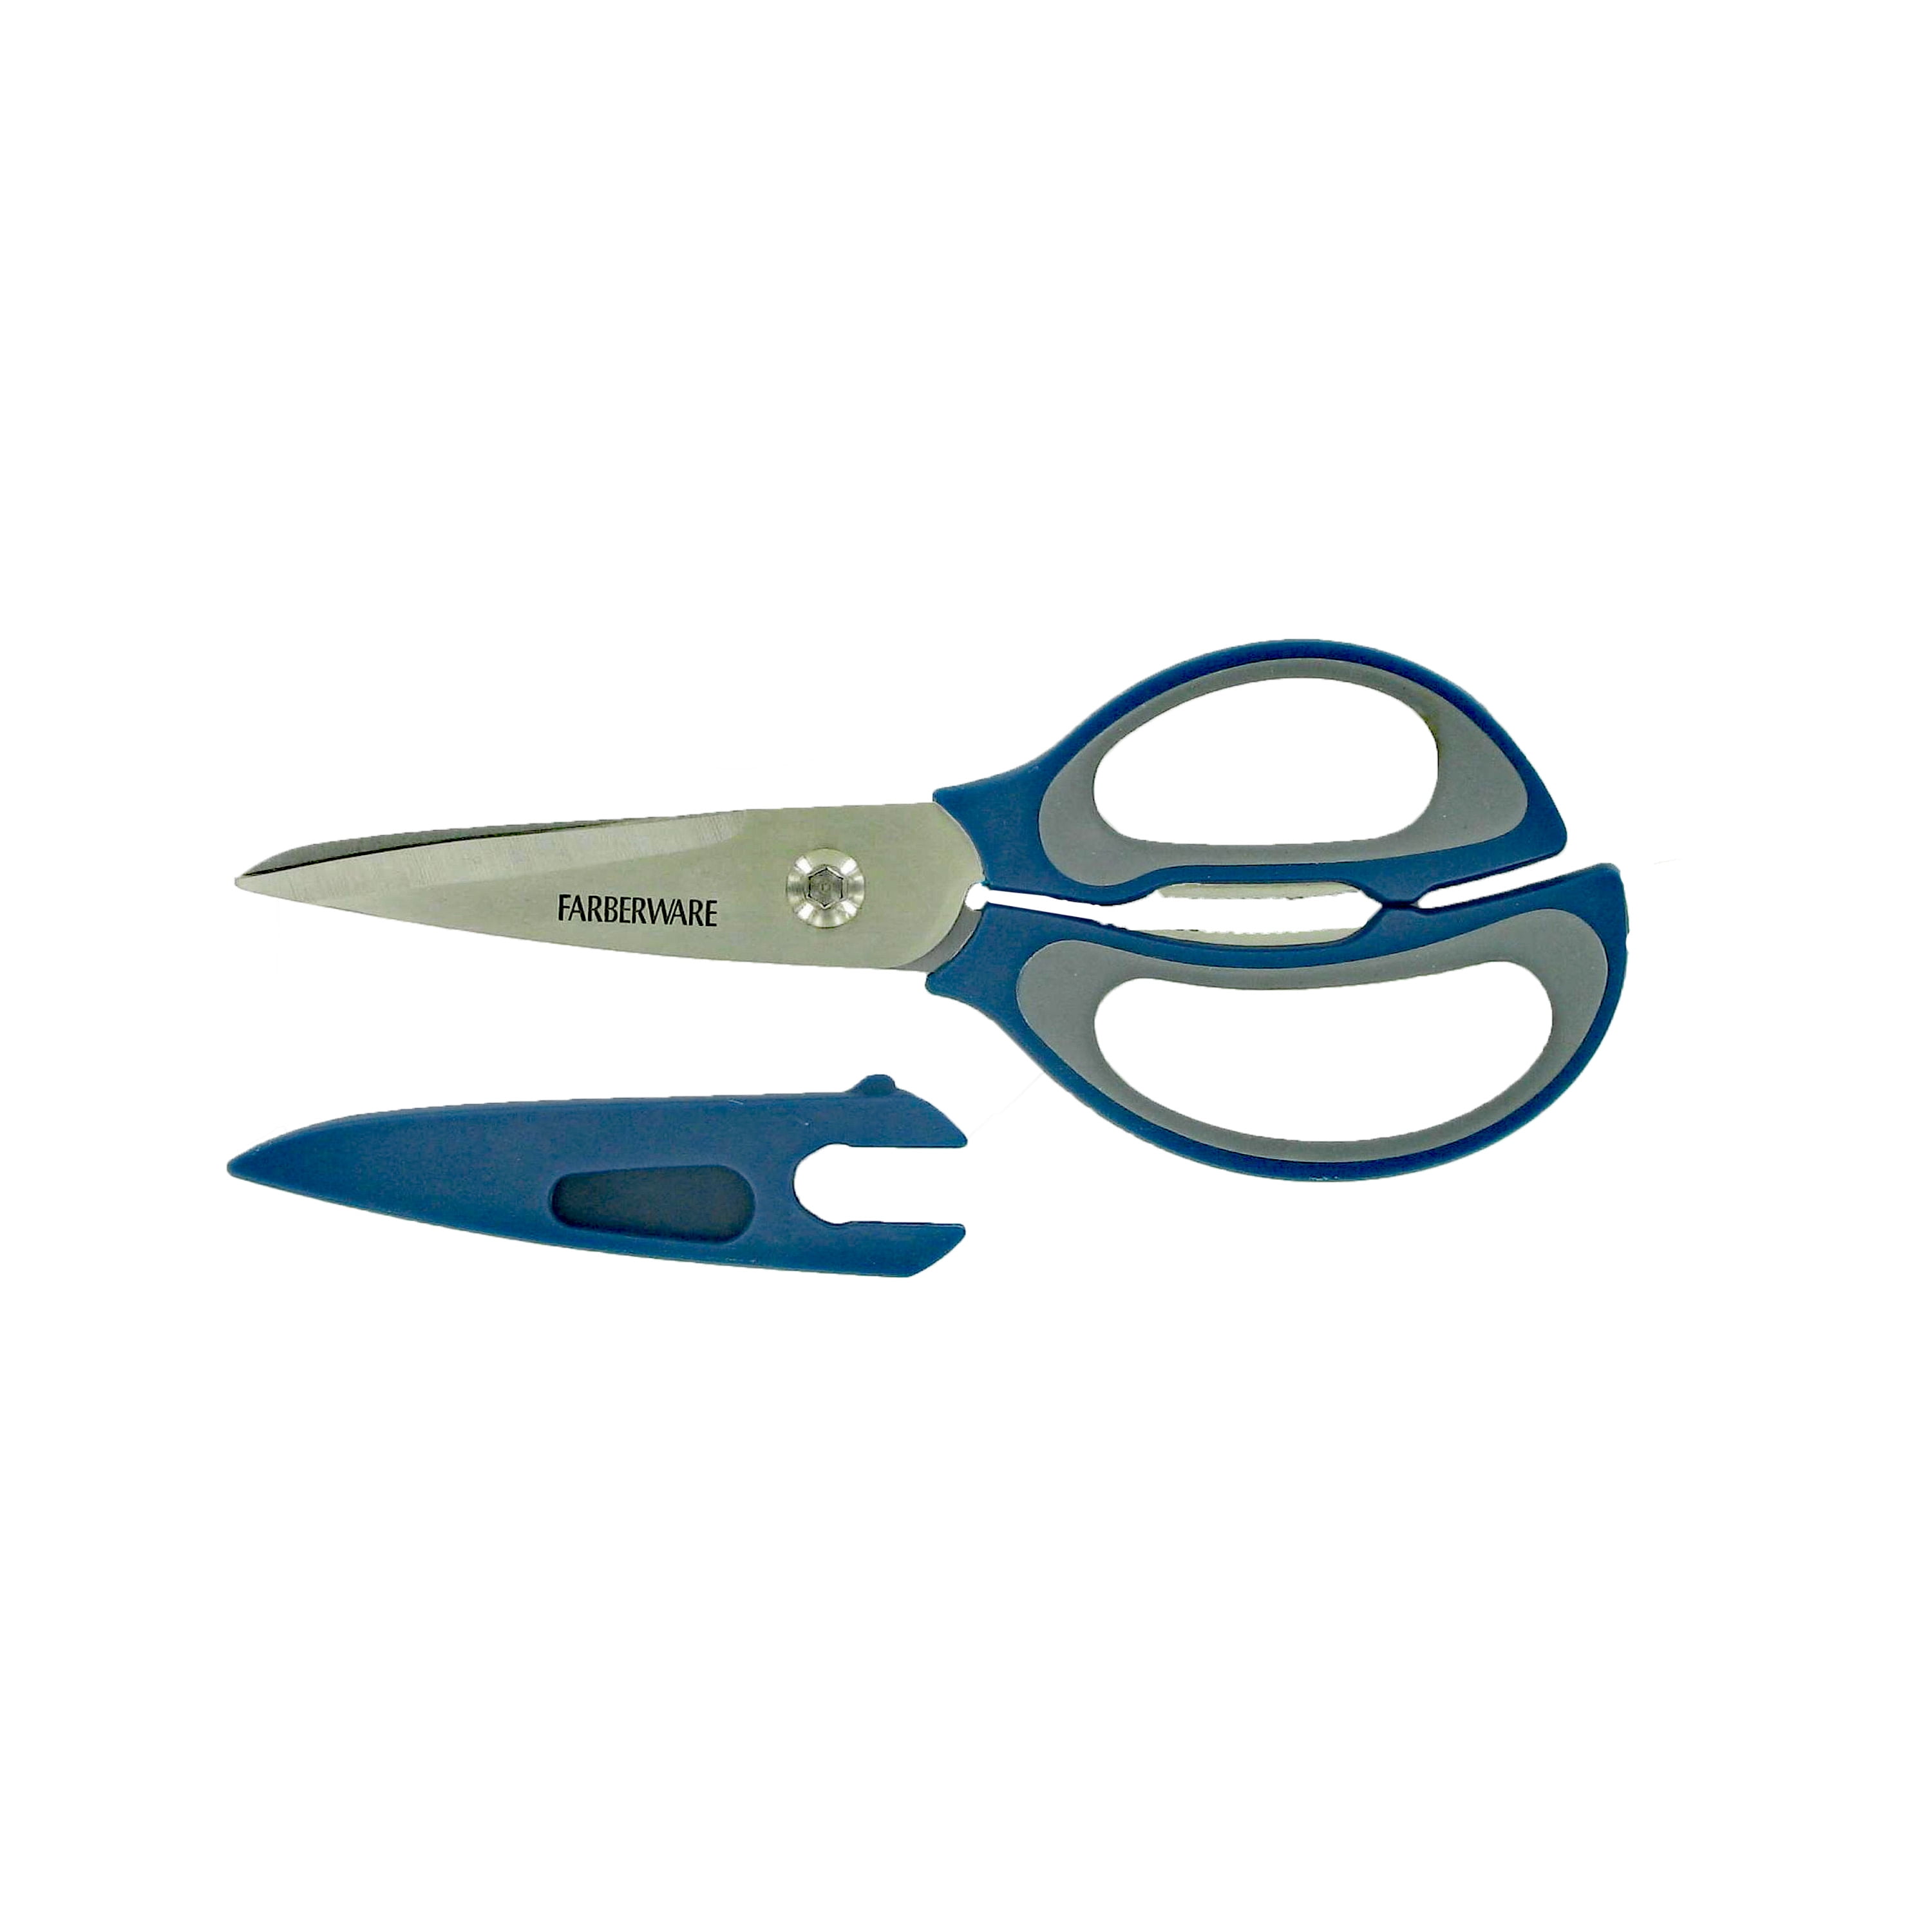 Kit Scissors - 4 inch - Angled Blades - 1 Each - M5056